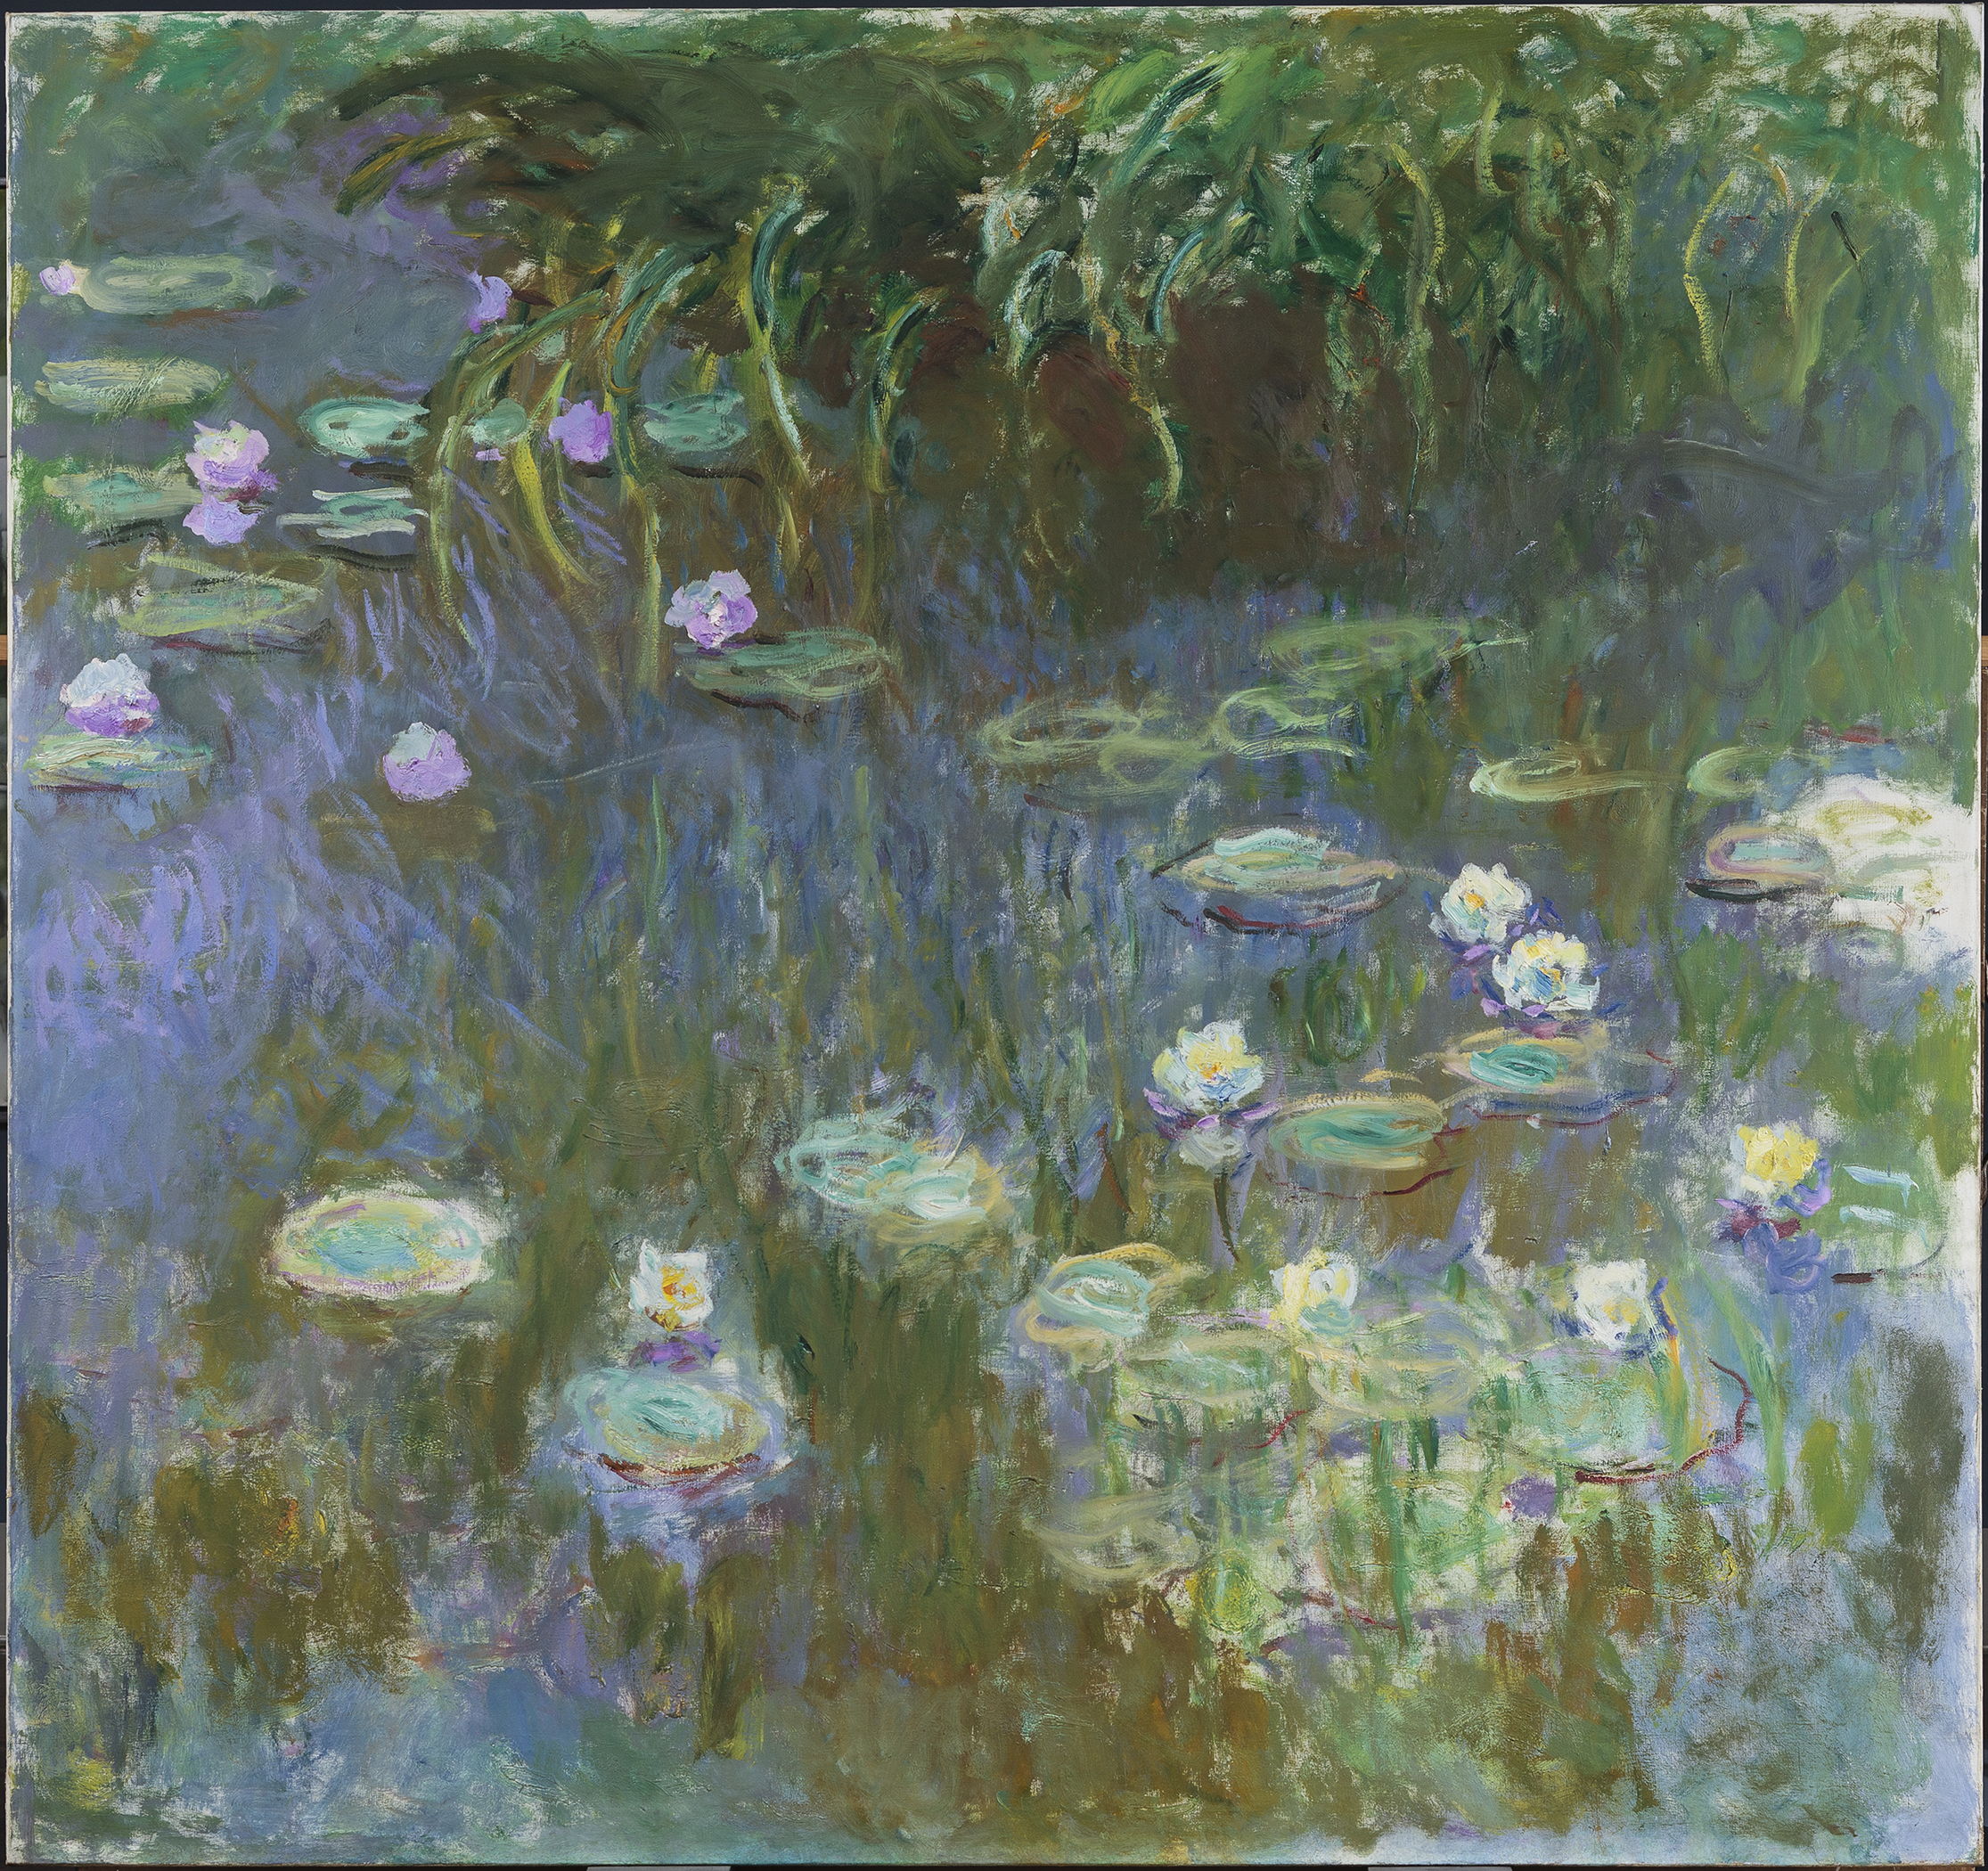 Water Lilies by Claude Monet - ca. 1922 - 79 in. by 84 in Toledo Museum of Art